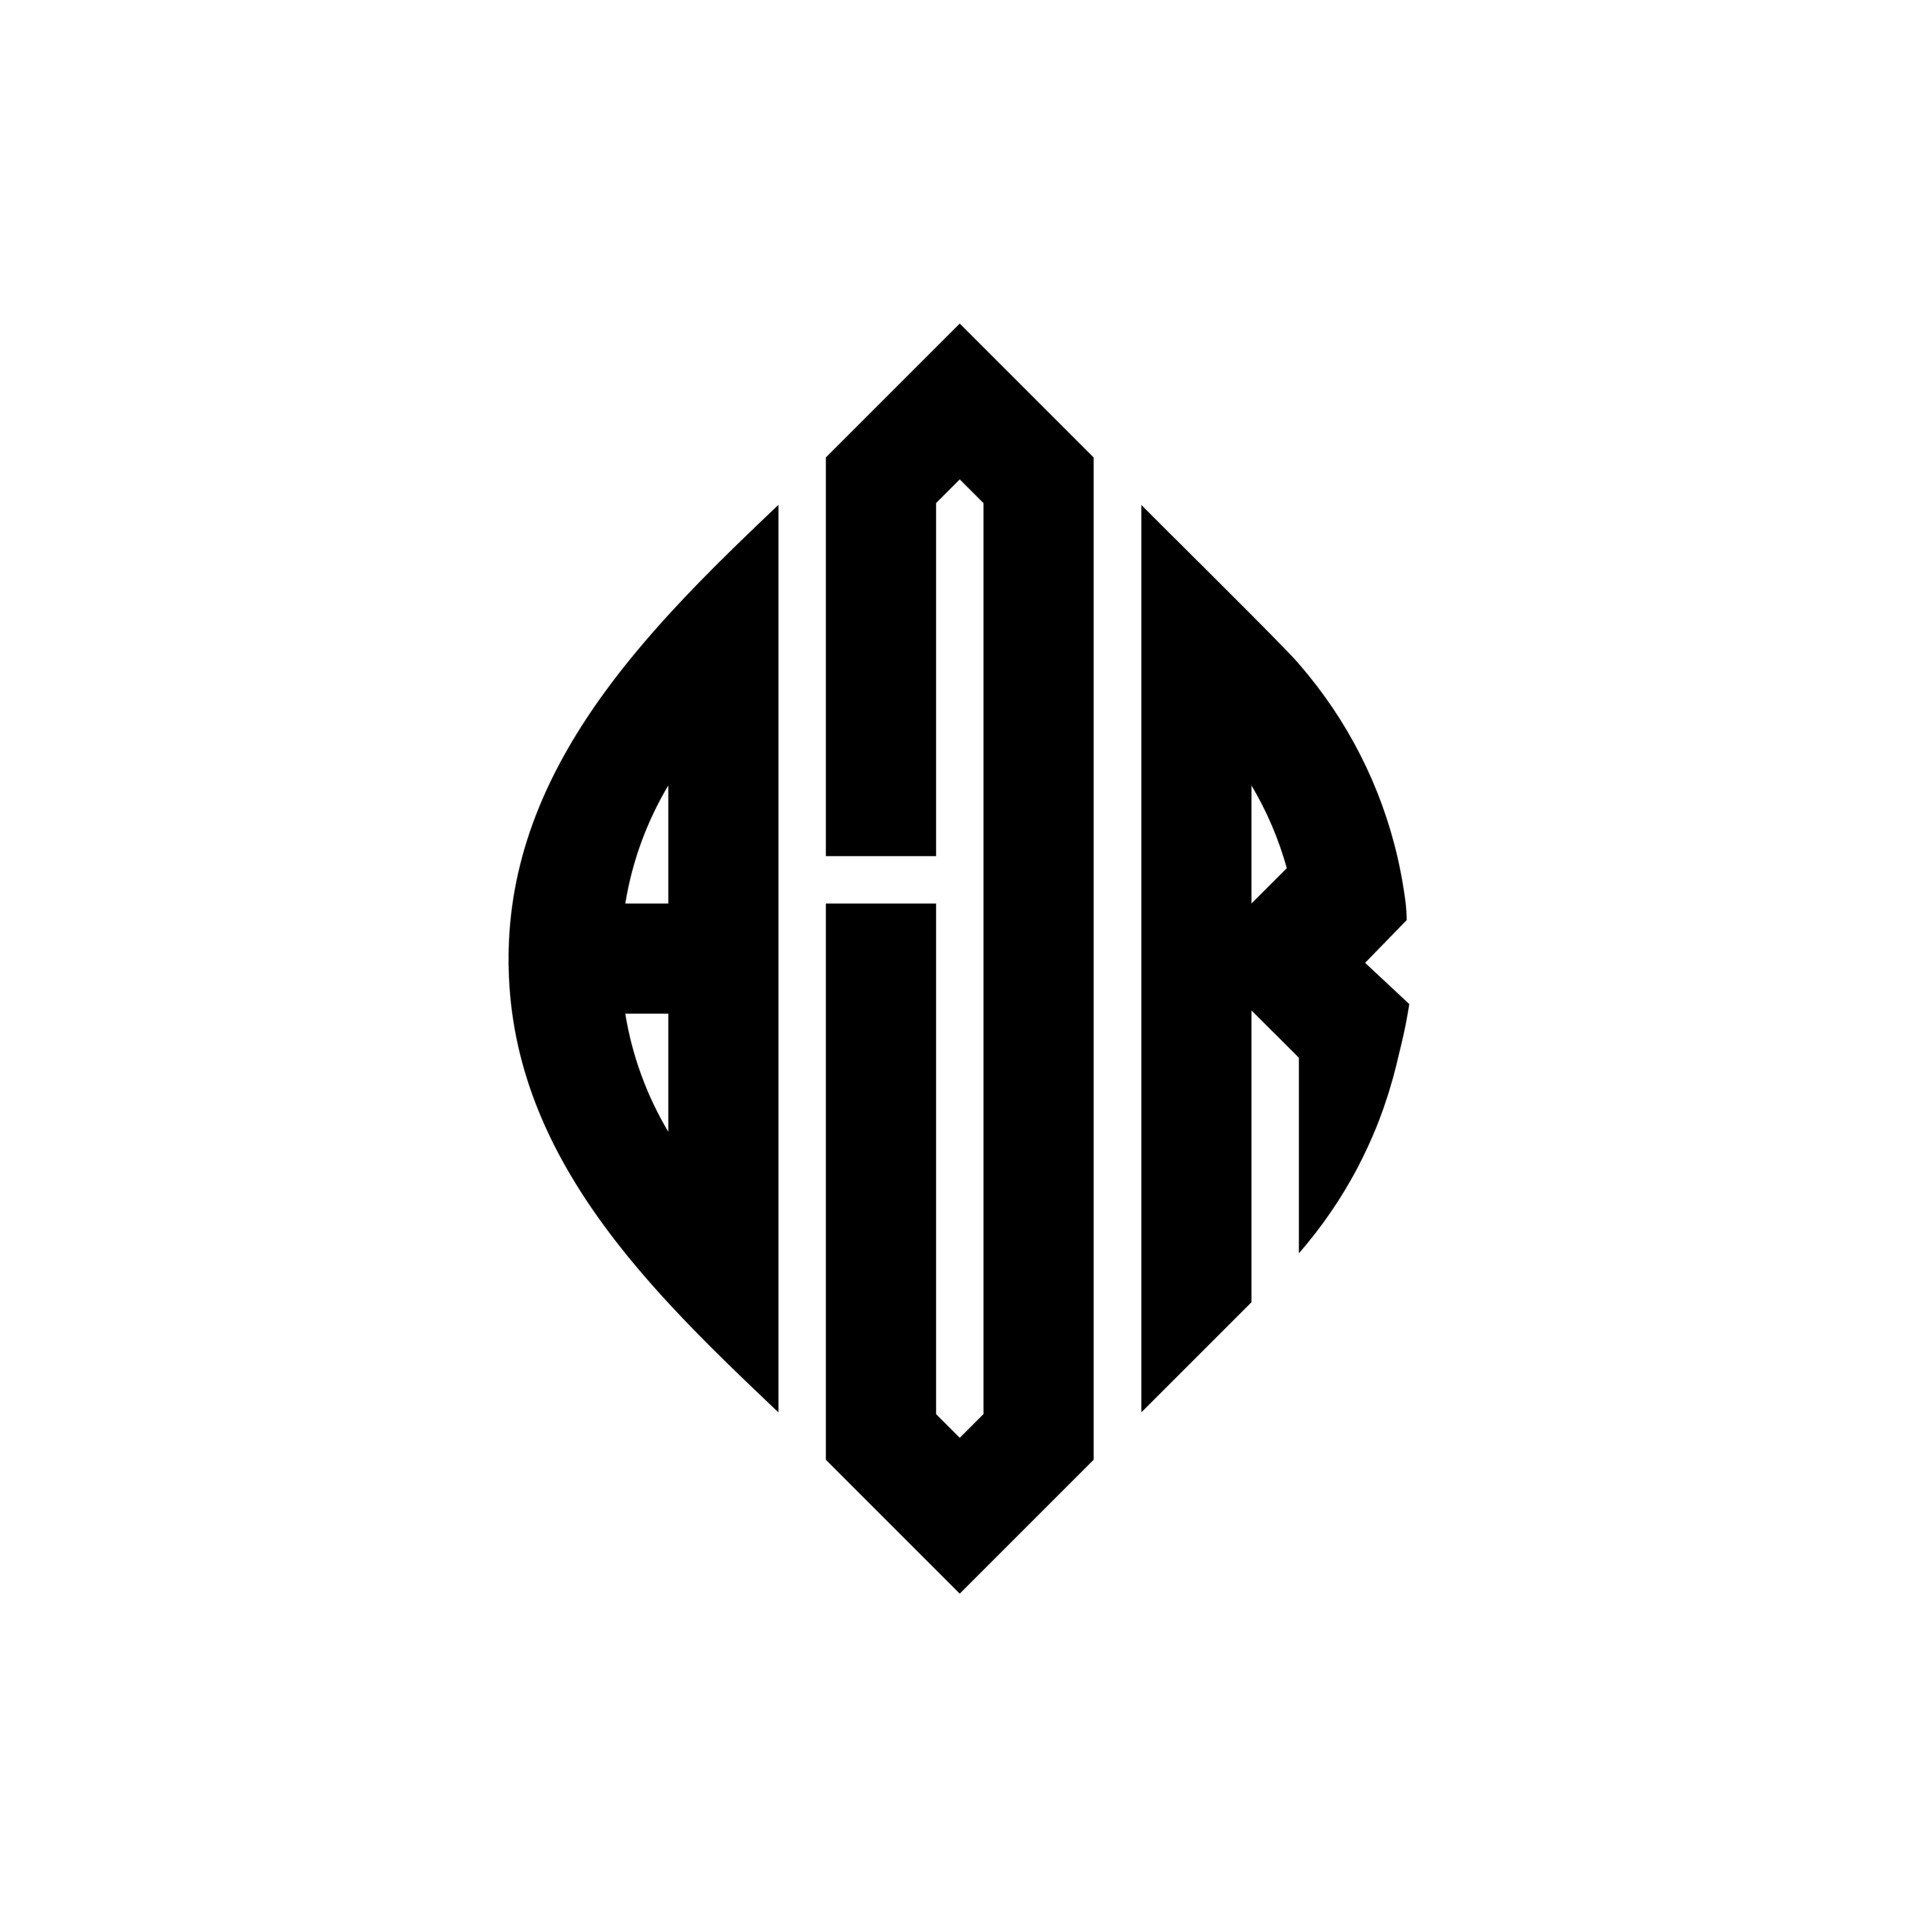 BJL shield with round shape logo design vector template, monogram logo, abstract logo, wordmark logo, lettermark logo, business logo, brand  logo, flat logo. Stock Vector